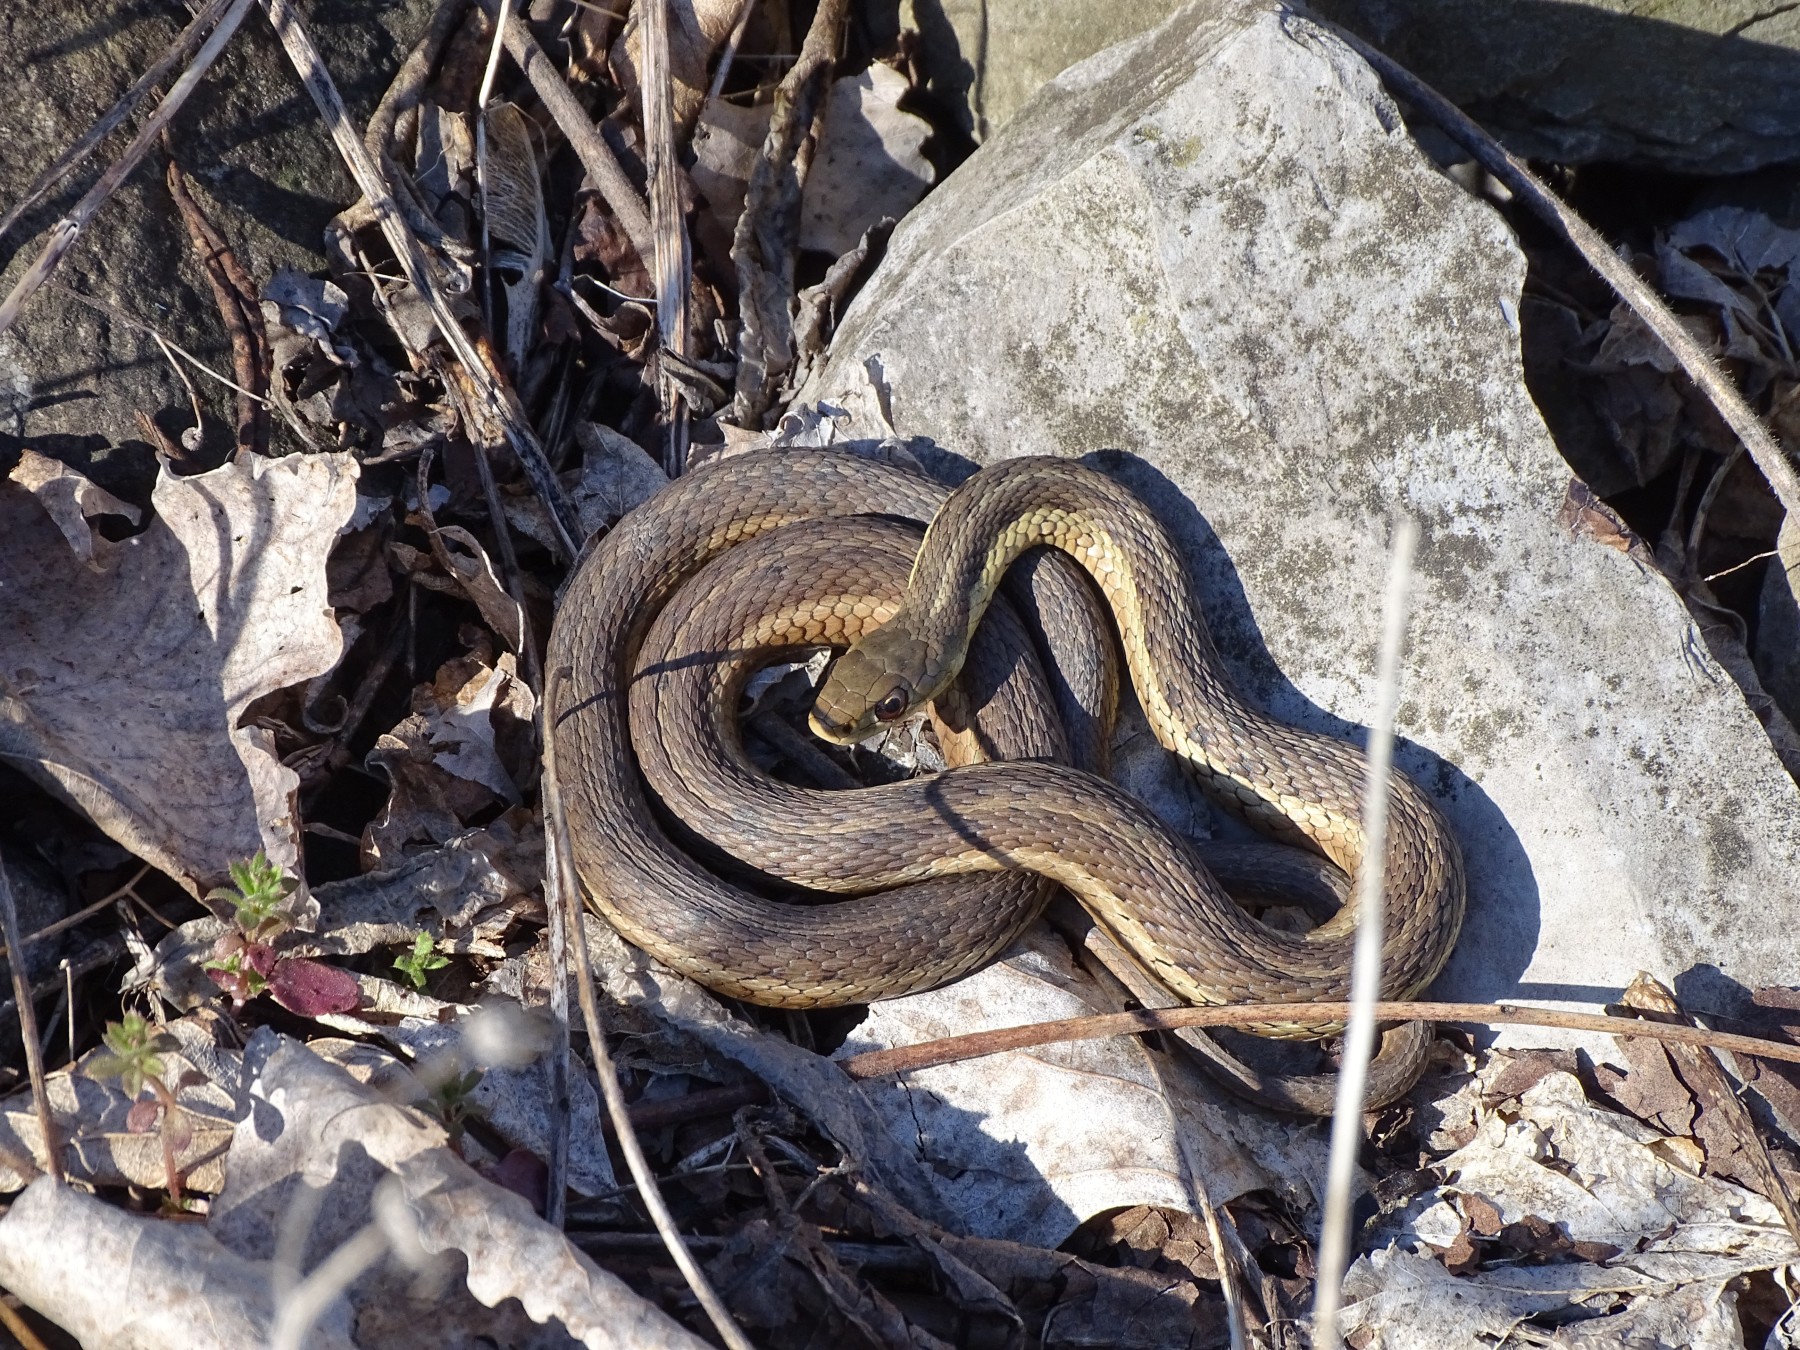 An Eastern garter snake in the wild